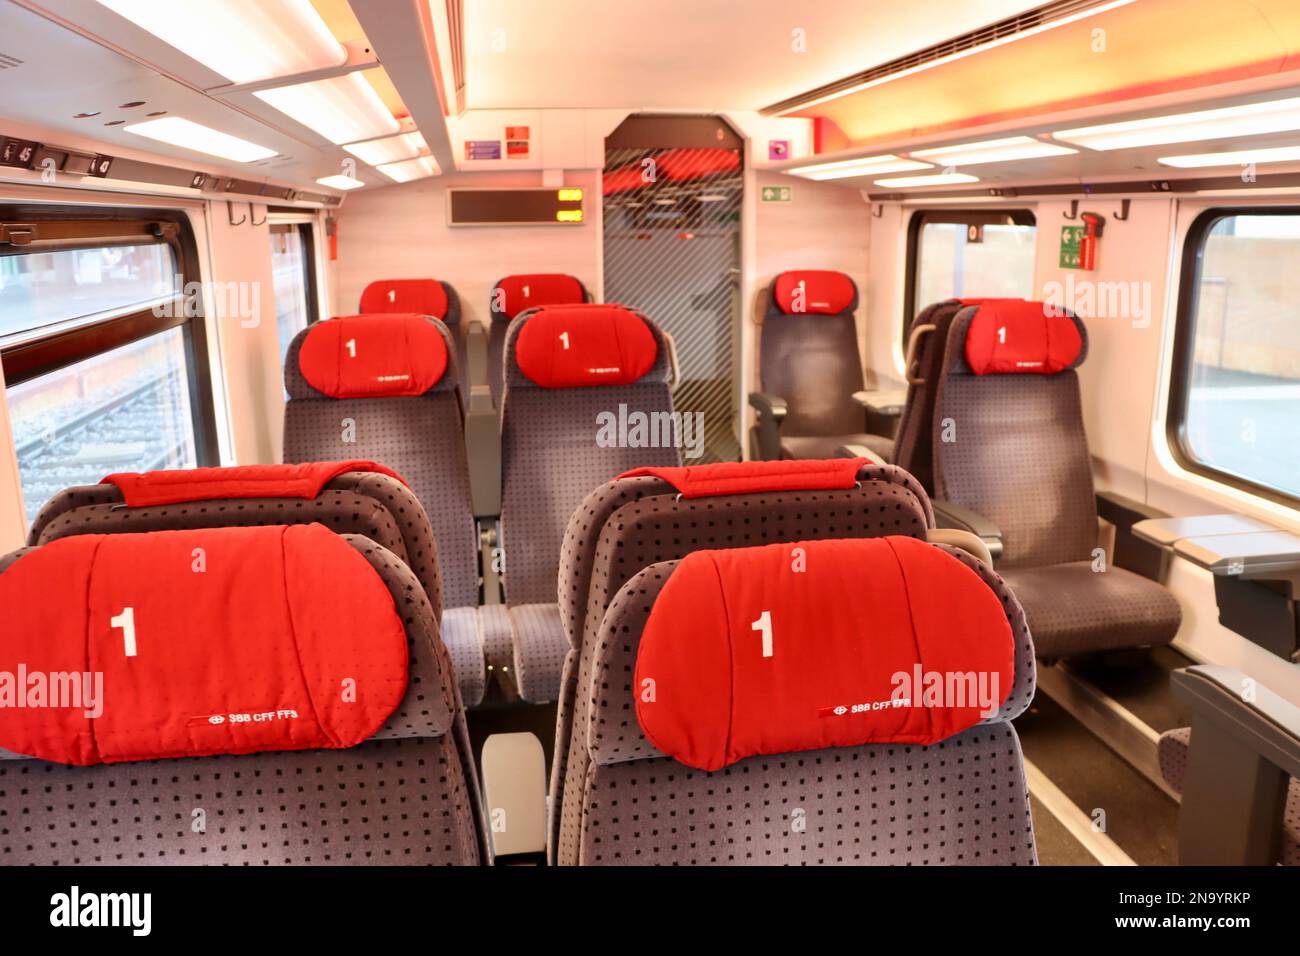 First class seating on Swiss railways InterRegio train. Stock Photo